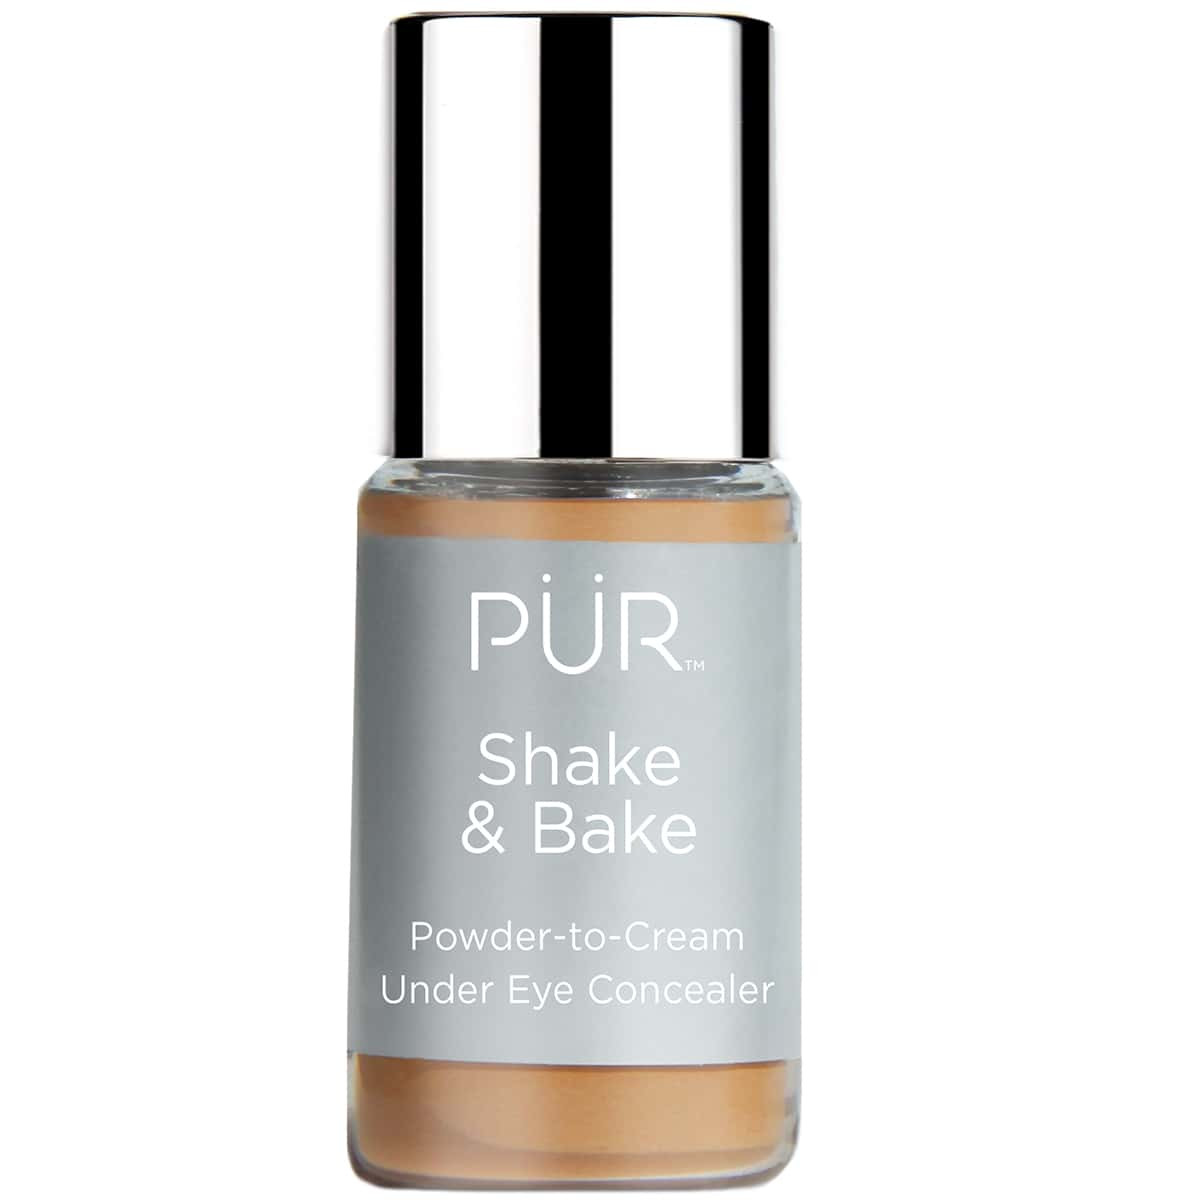 PUR Shake & Bake Powder-to-Cream Under Eye Concealer